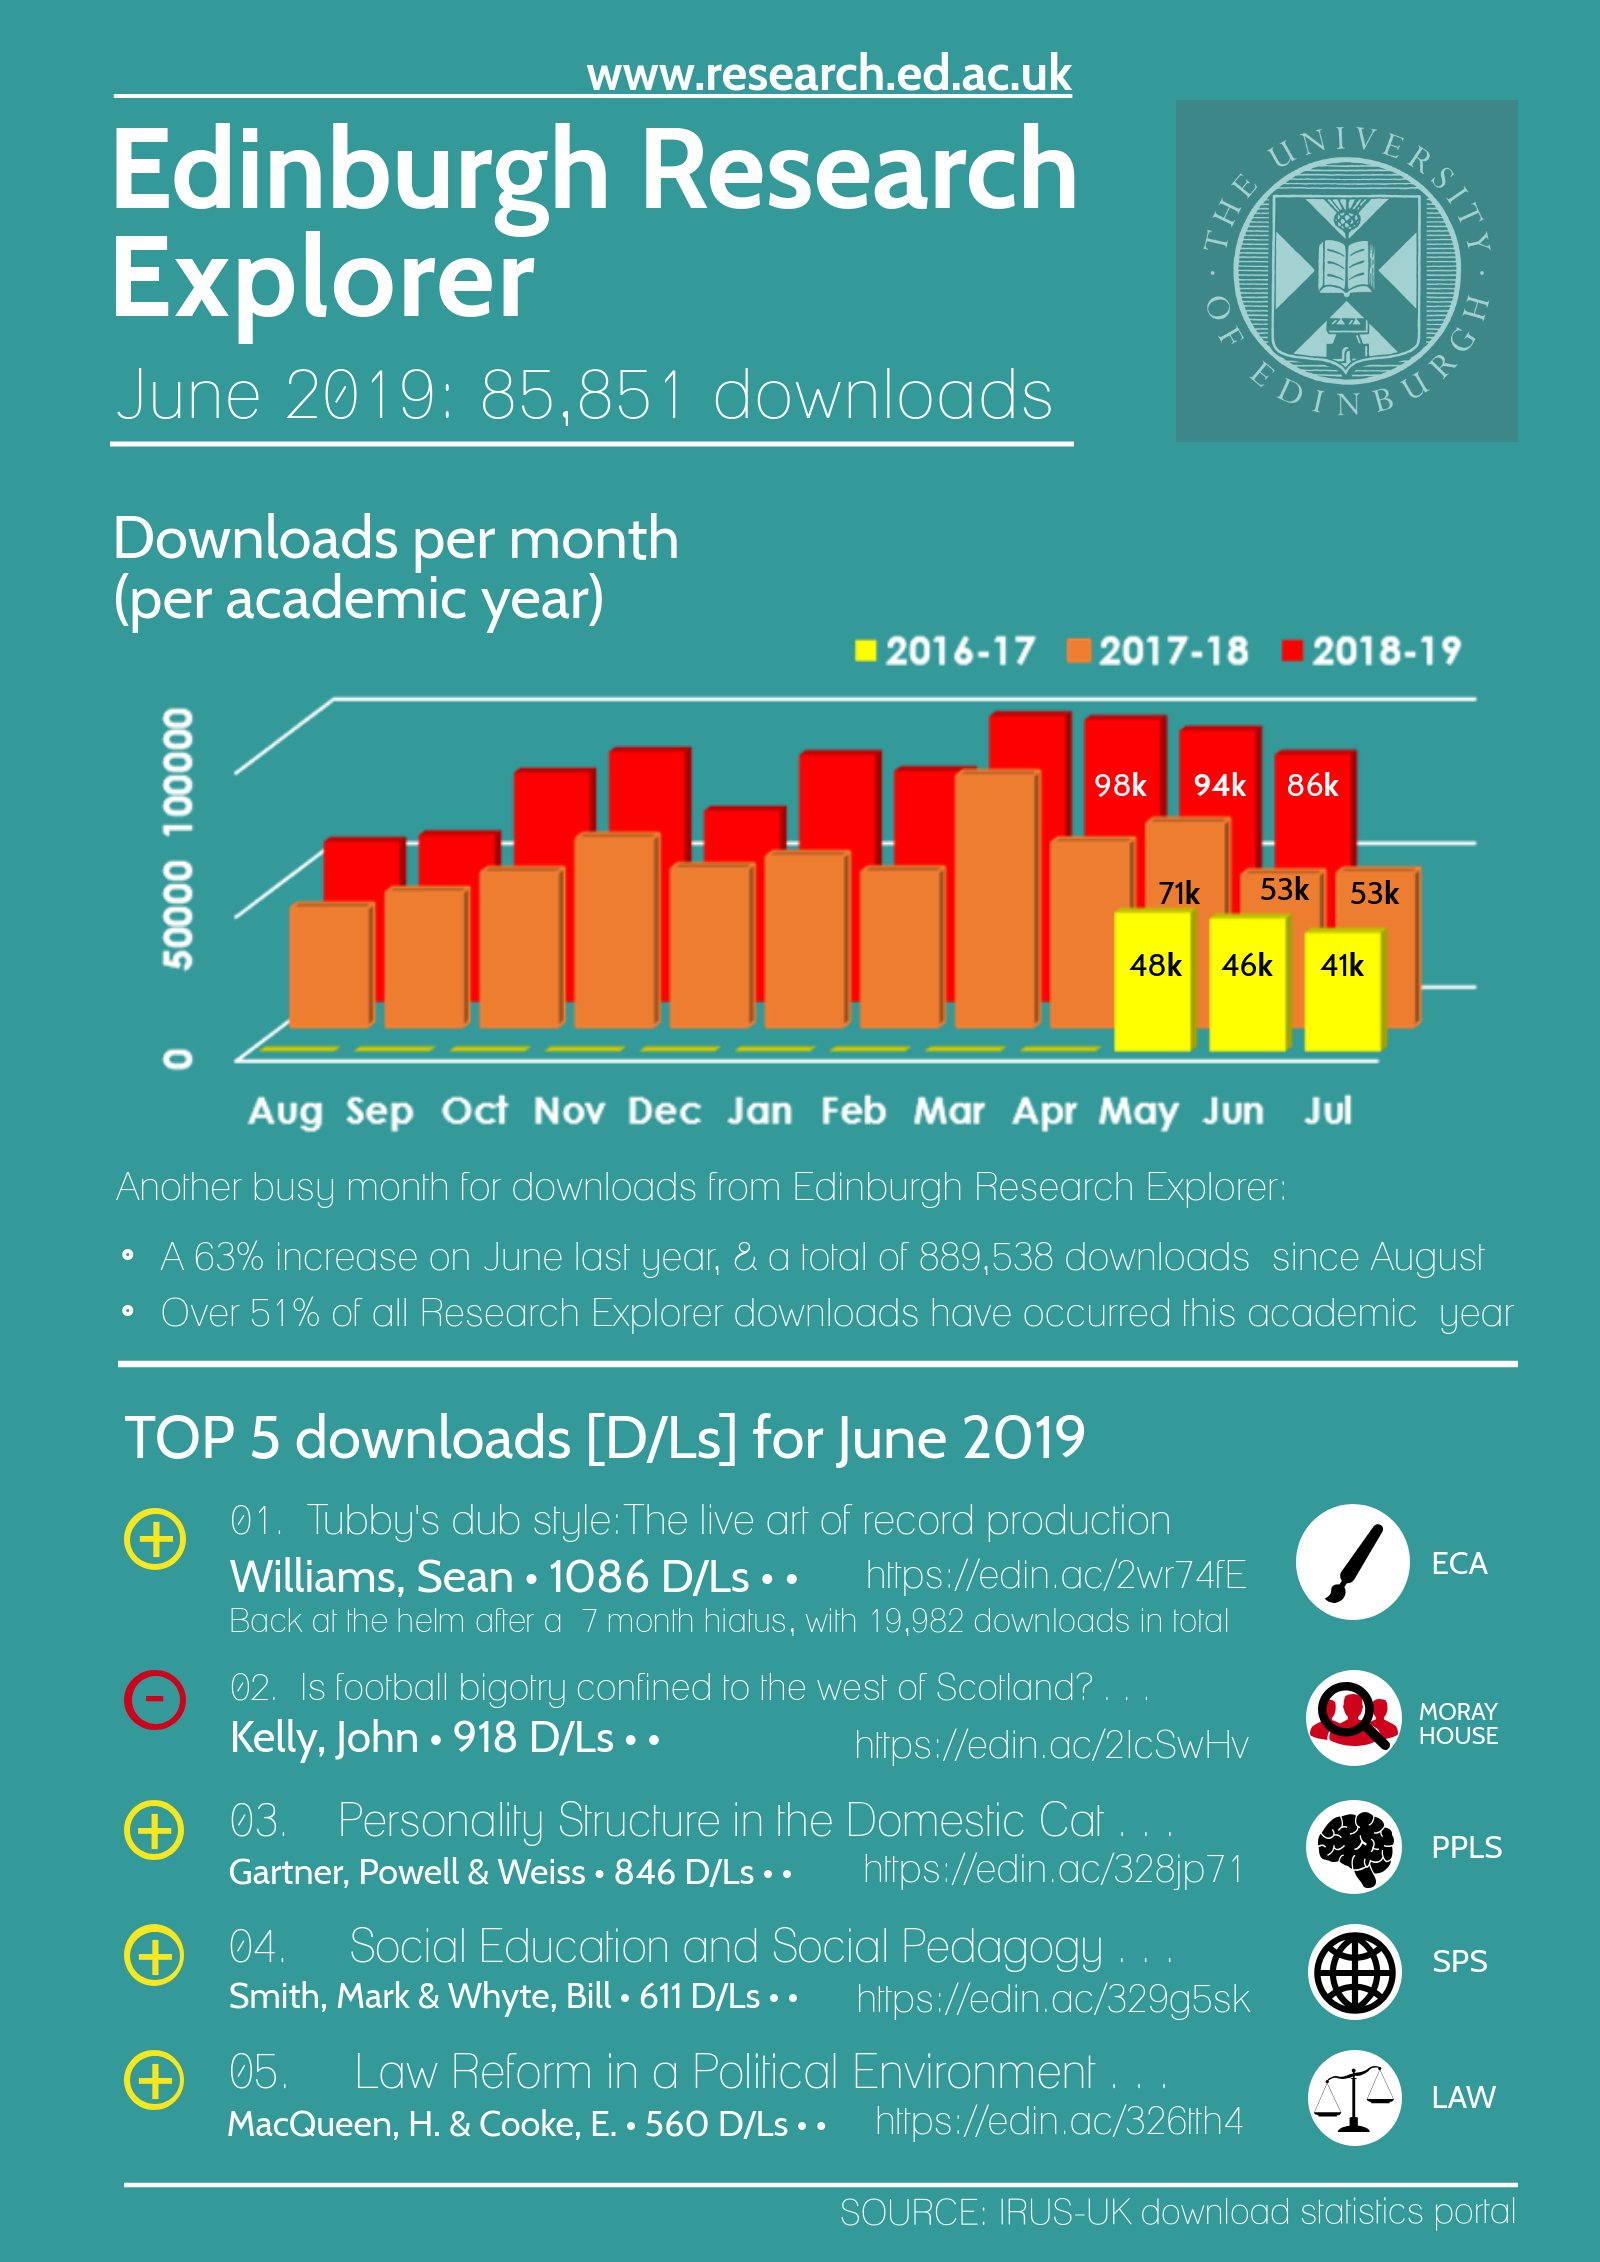 Edinburgh Research Explorer: June 2019 downloads infographic - Chart: Downloads per month (per academic year) 2016-2019